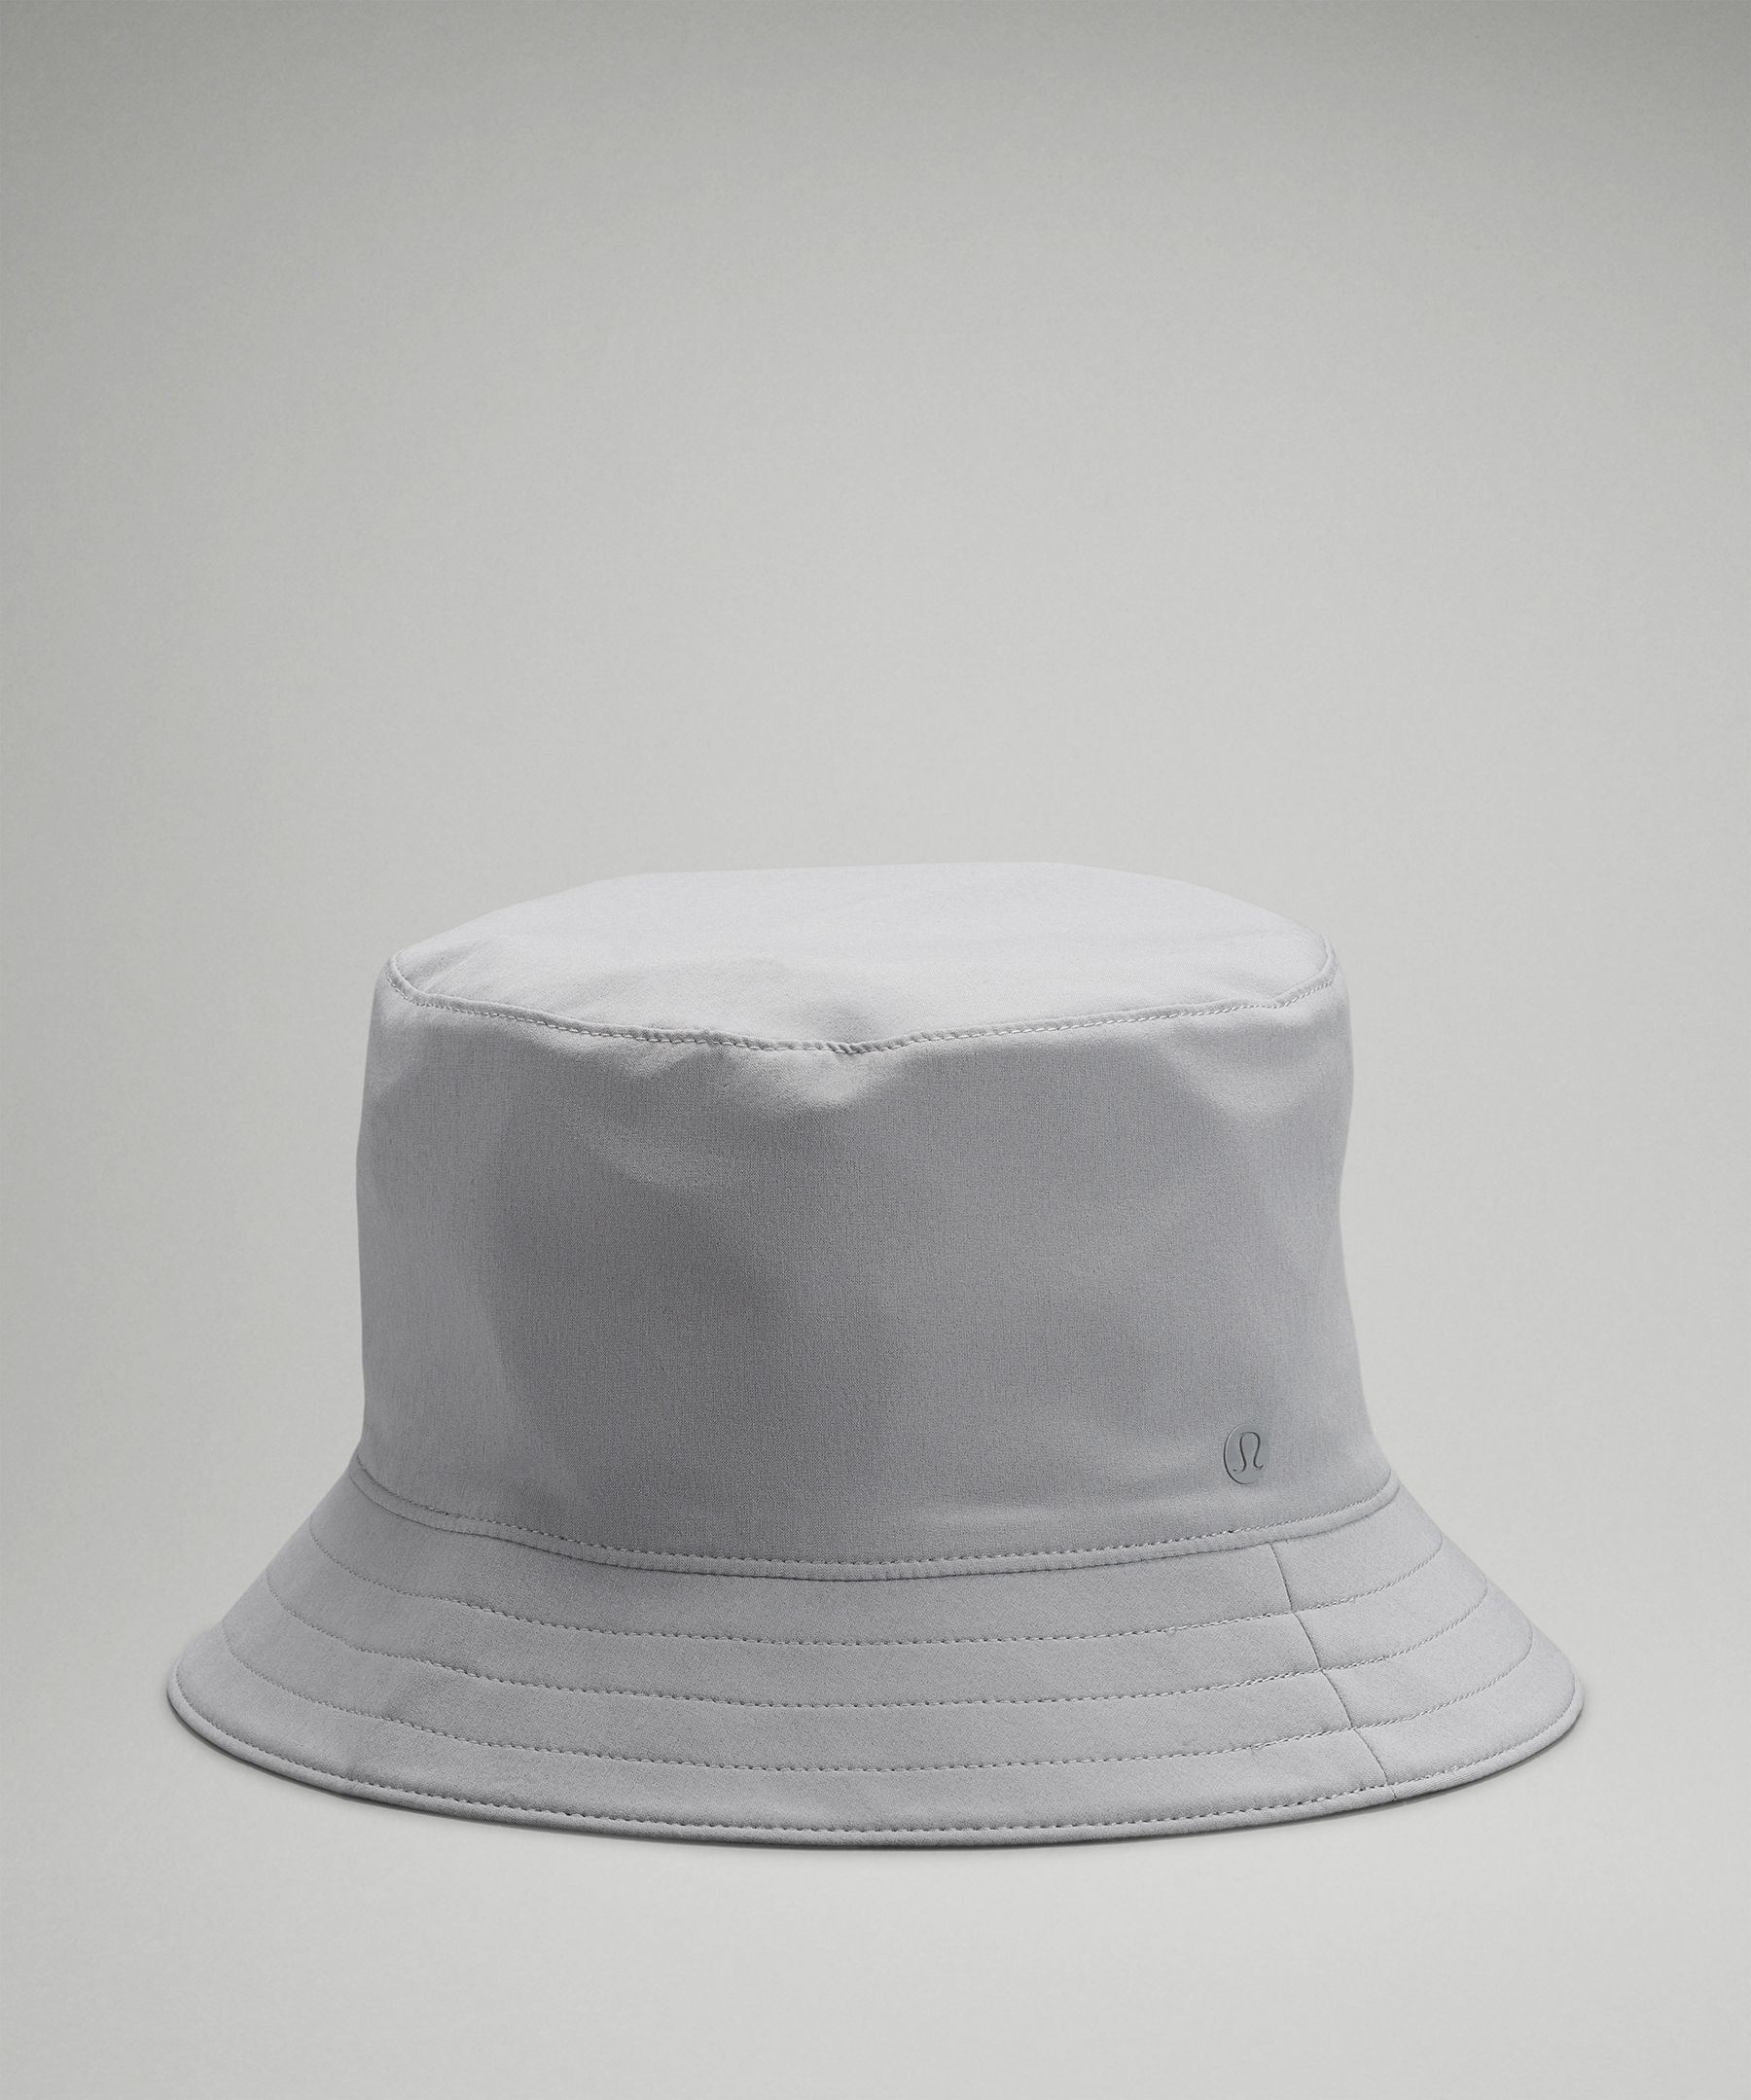 Lululemon Both Ways Bucket Hat In Rhino Grey/heritage 365 Camo Rhino Grey Multi